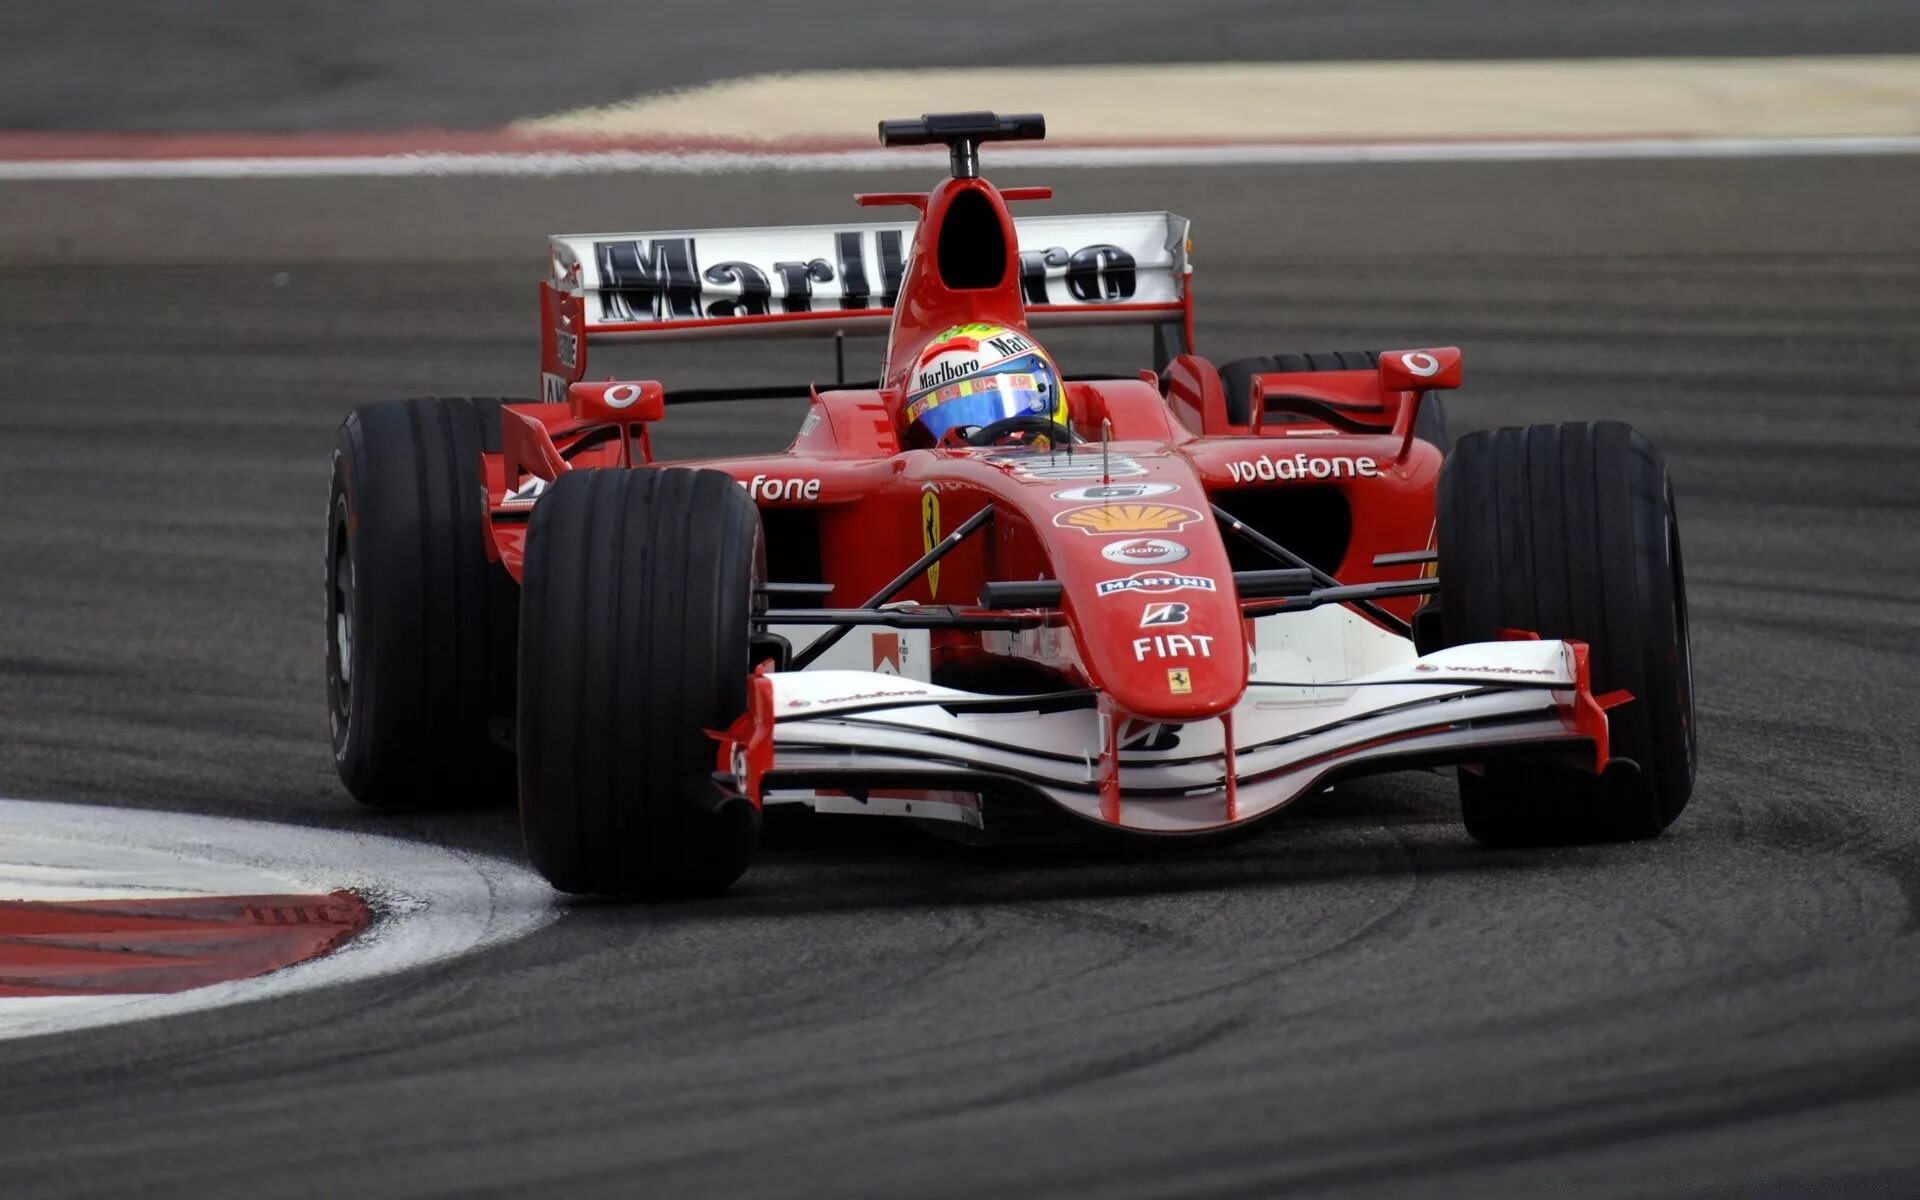 Ferrari Formula 1. Ferrari f1 f310. Феррари гоночная машина формула 1. Гоночный Болид Феррари формула 1.